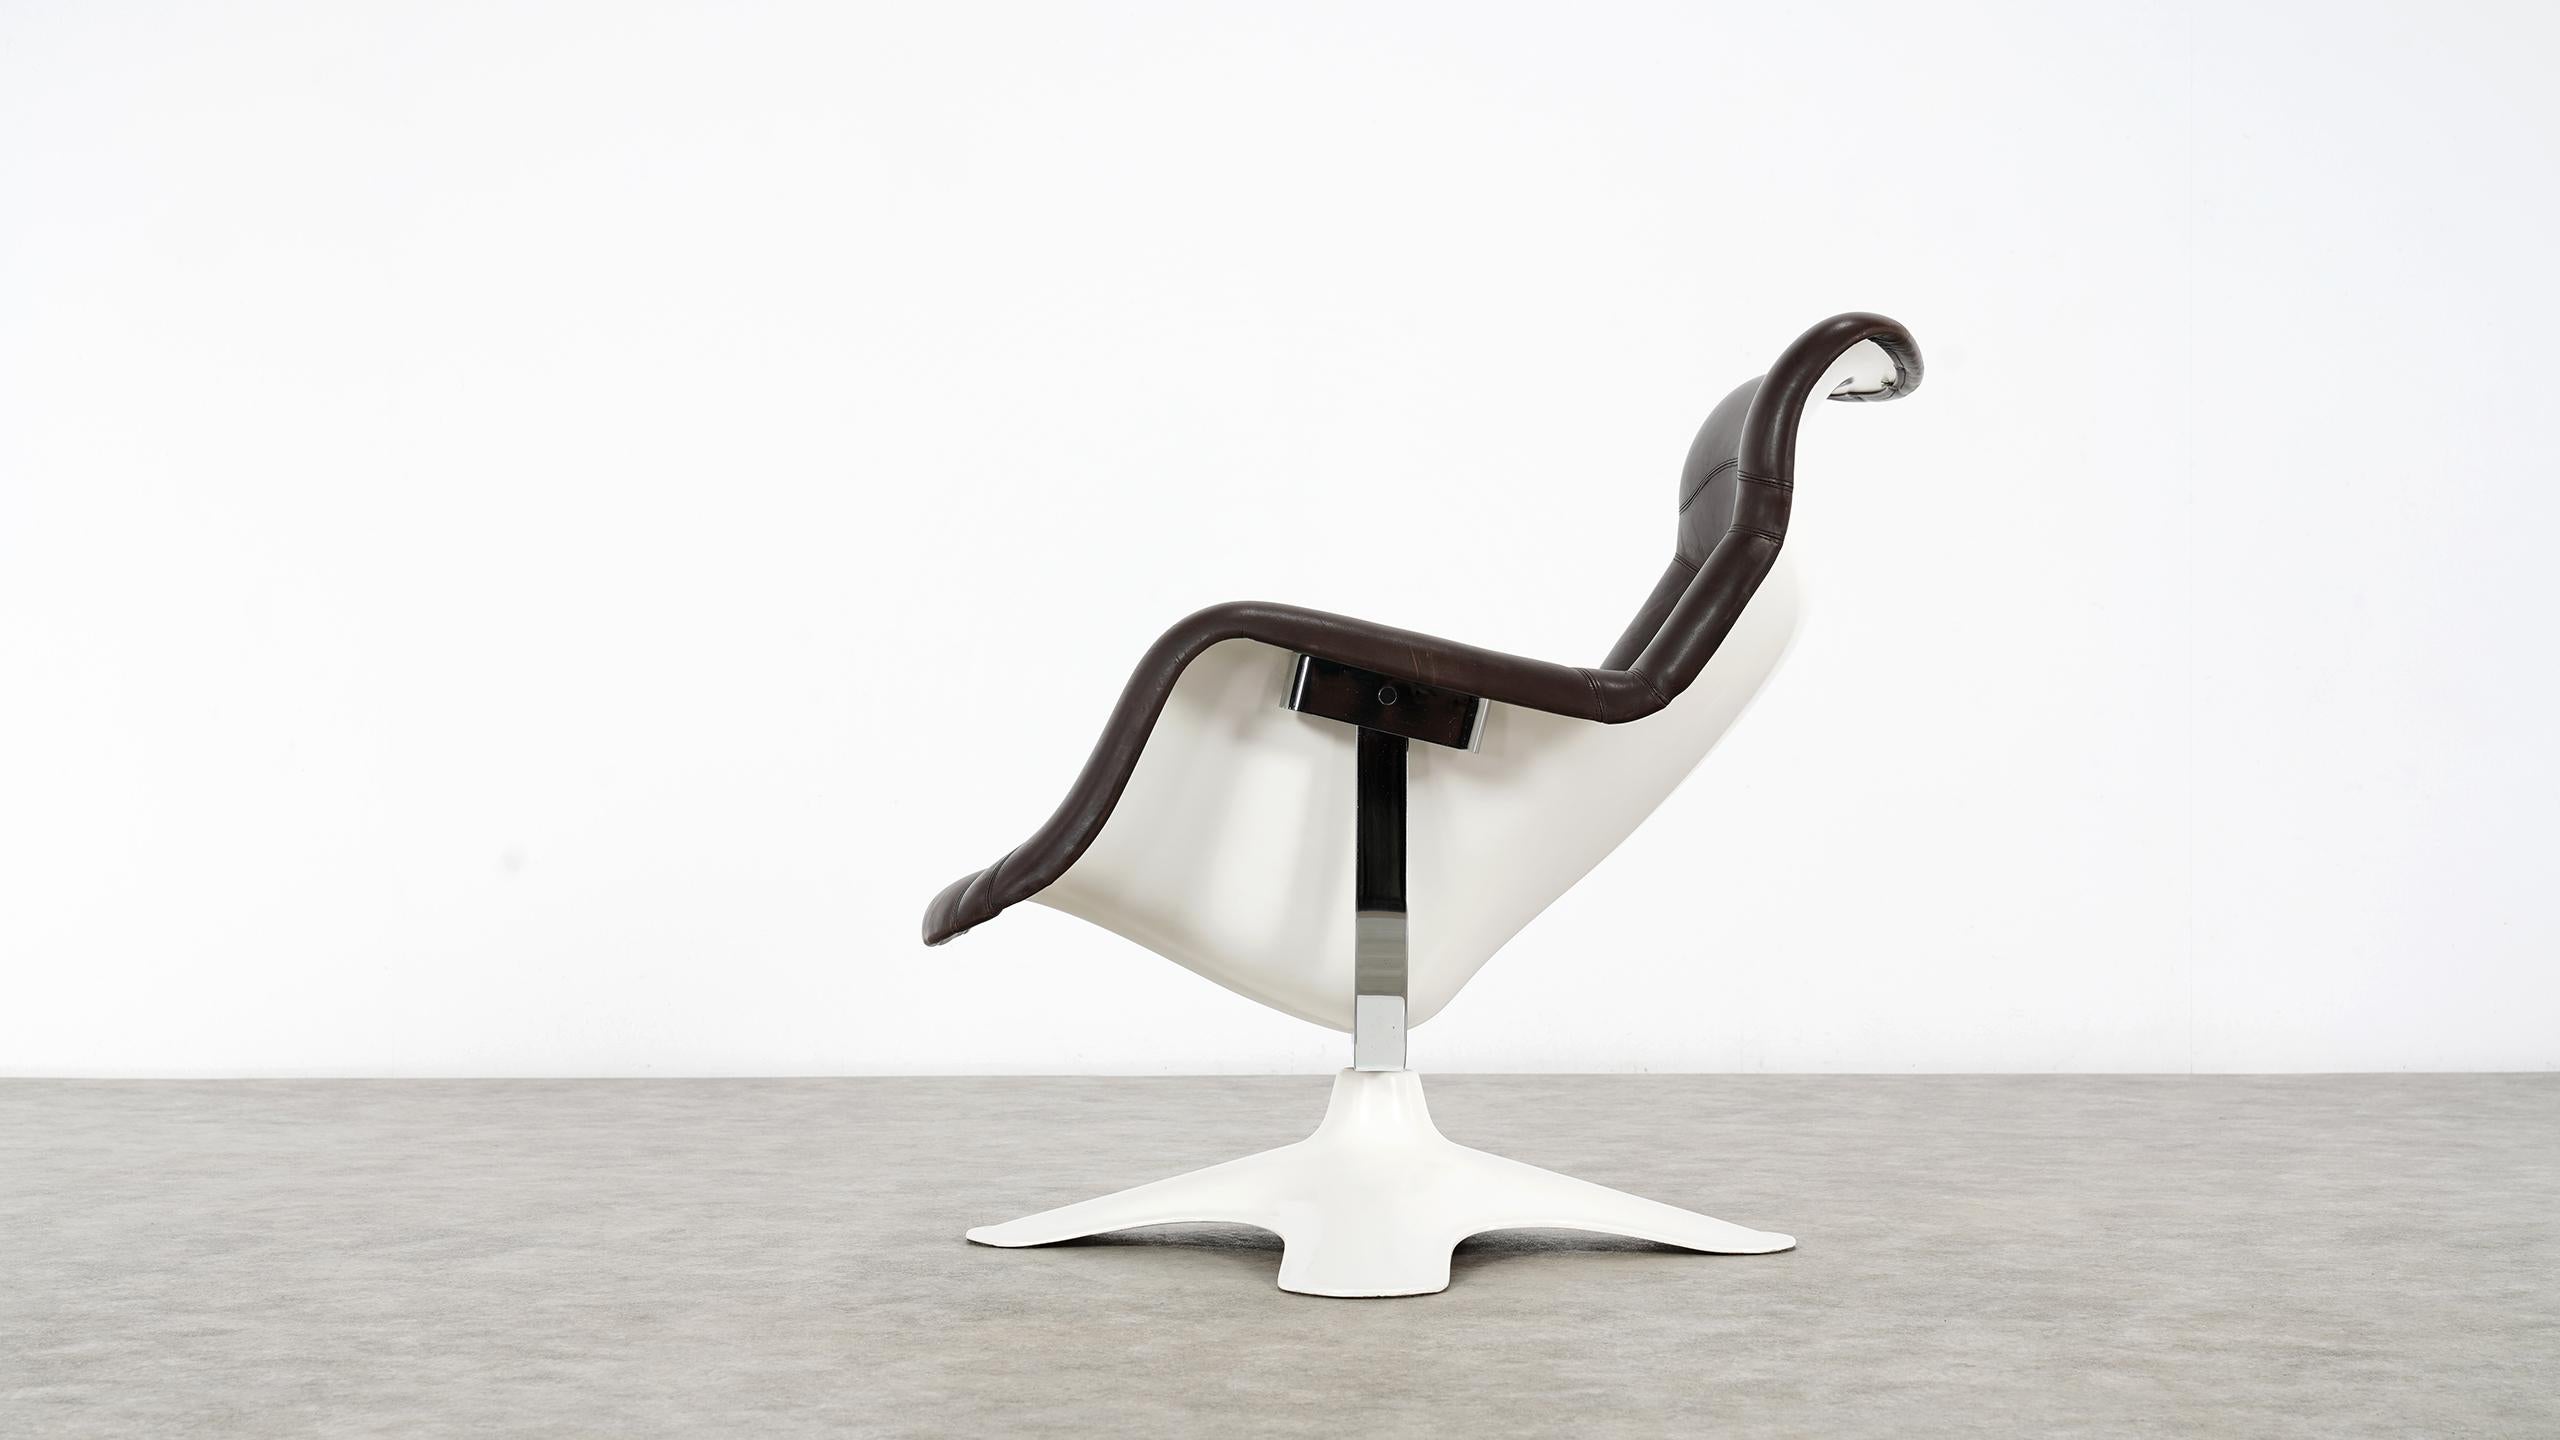 Hand-Crafted Karusselli Lounge Chair, Designed in 1964 by Yrjö Kukkapuro for Artek, Finland